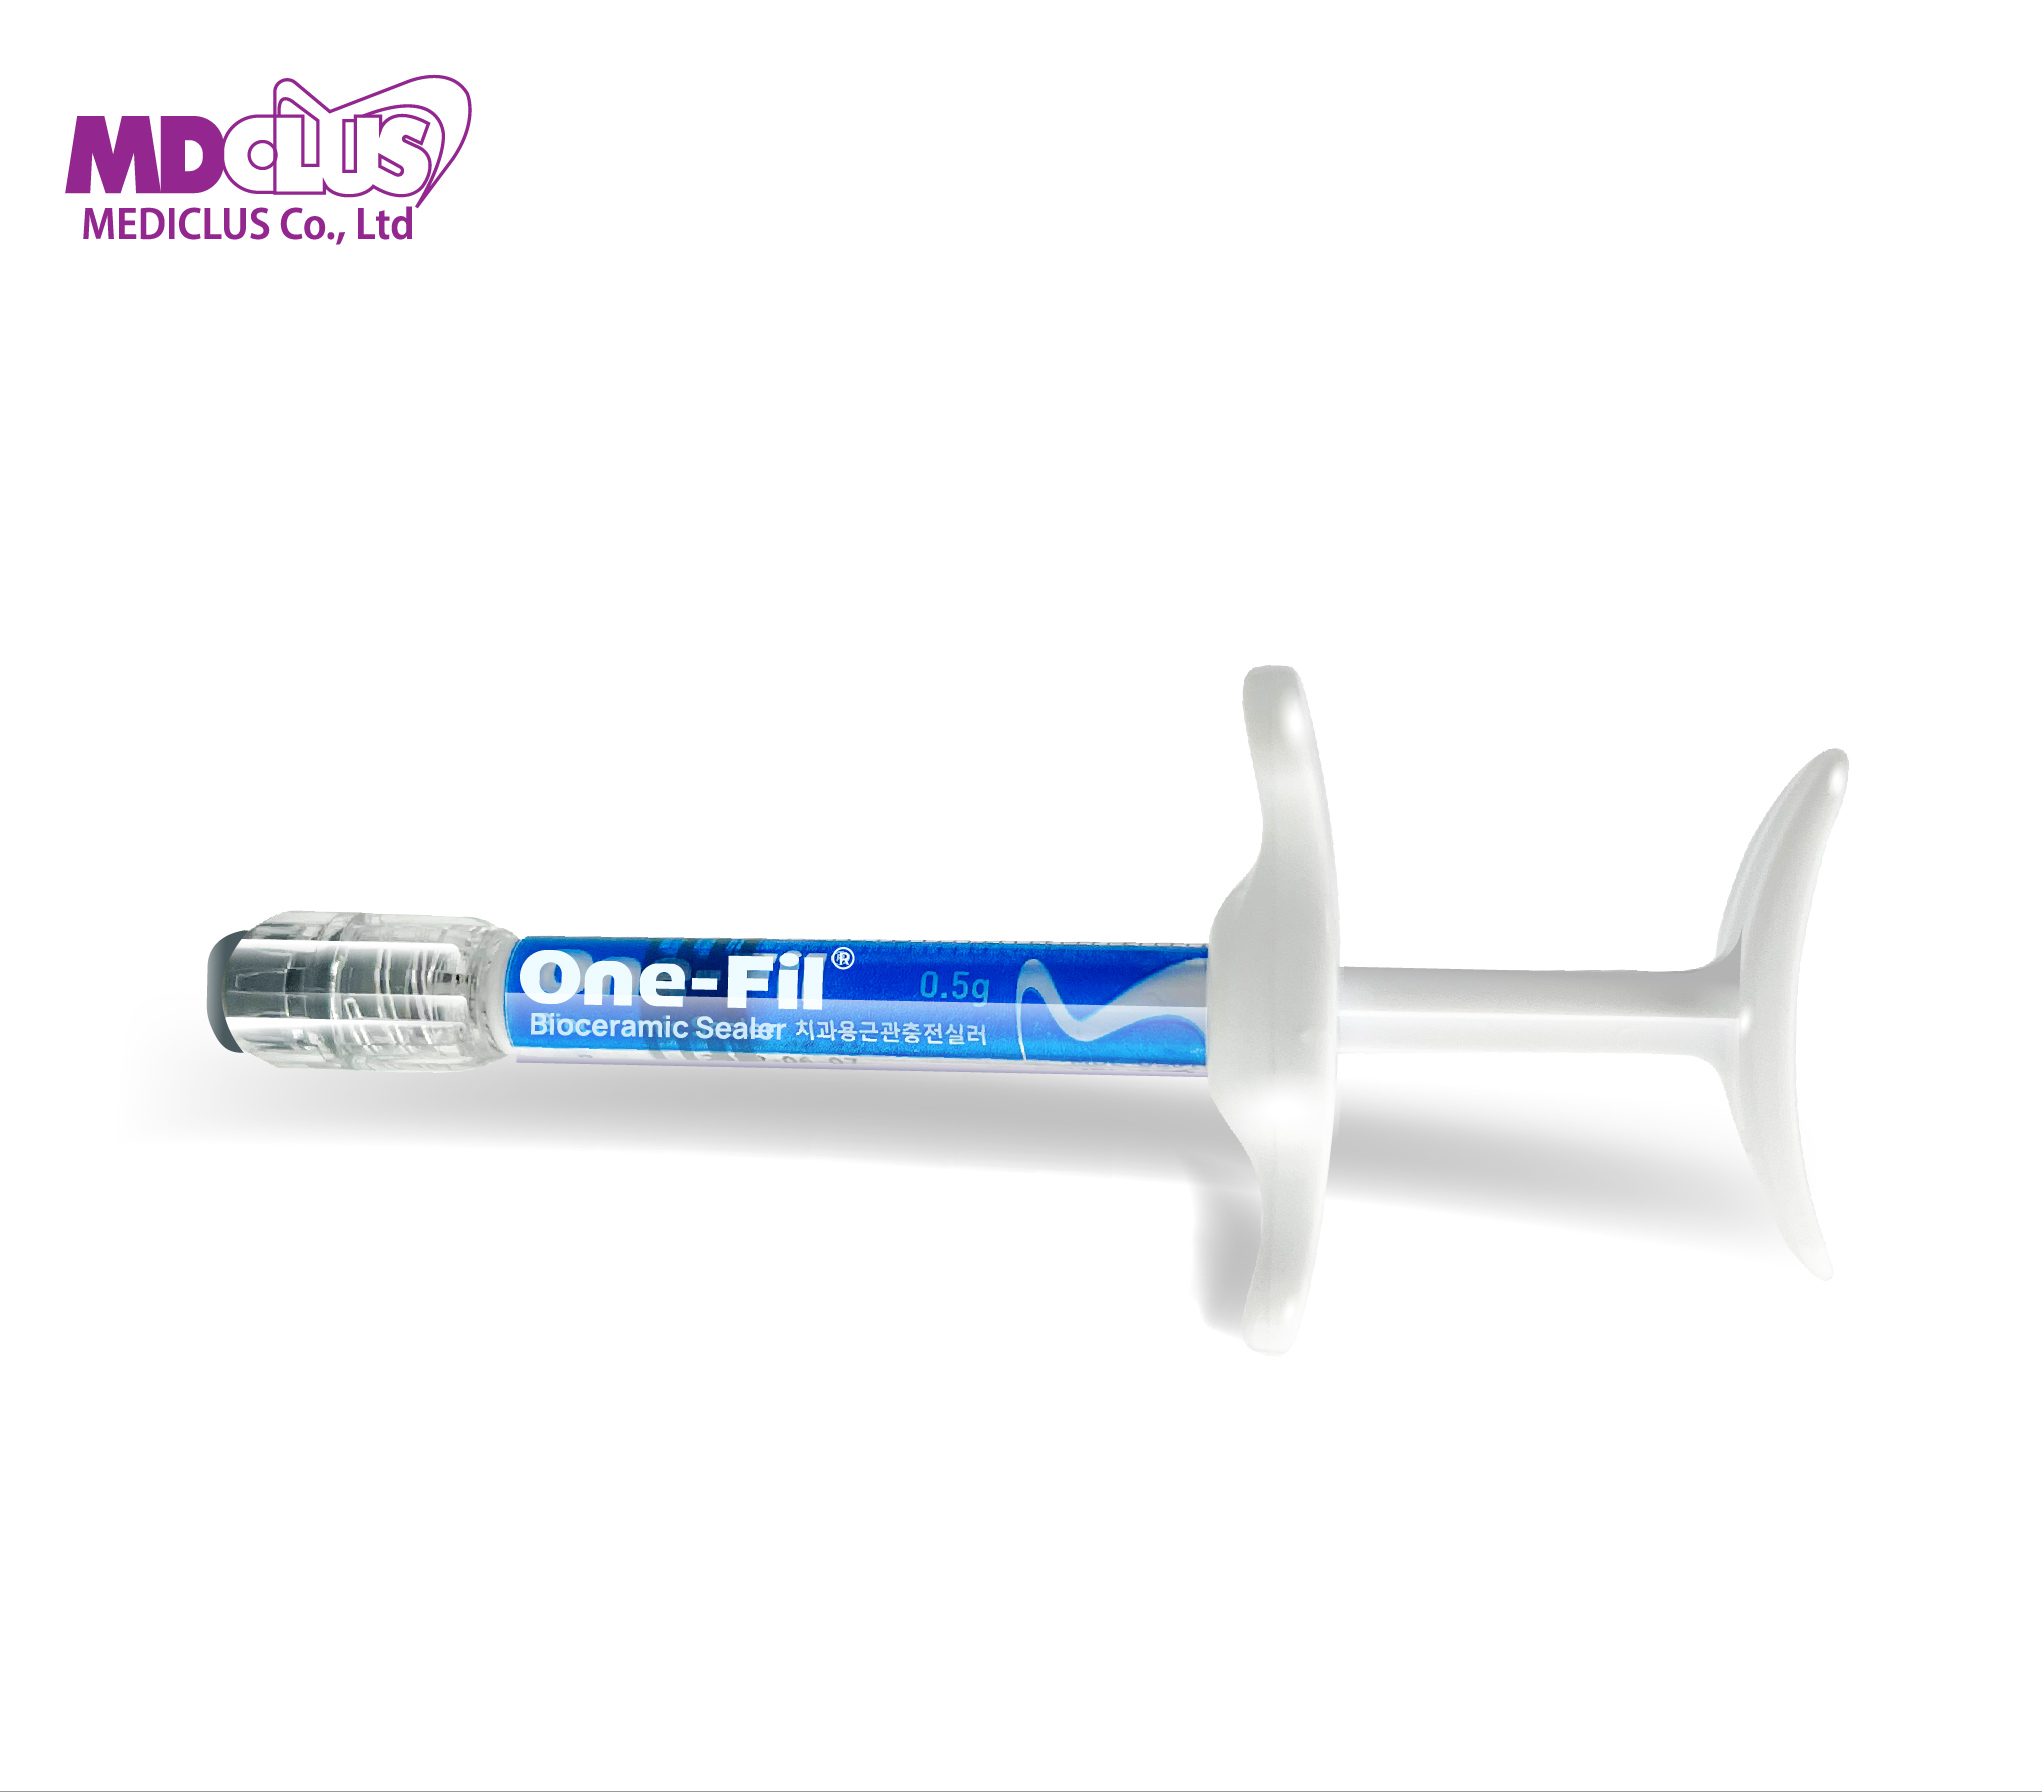 Mediclus Endo- Solution Kit (Expiry 24-Jul-24)